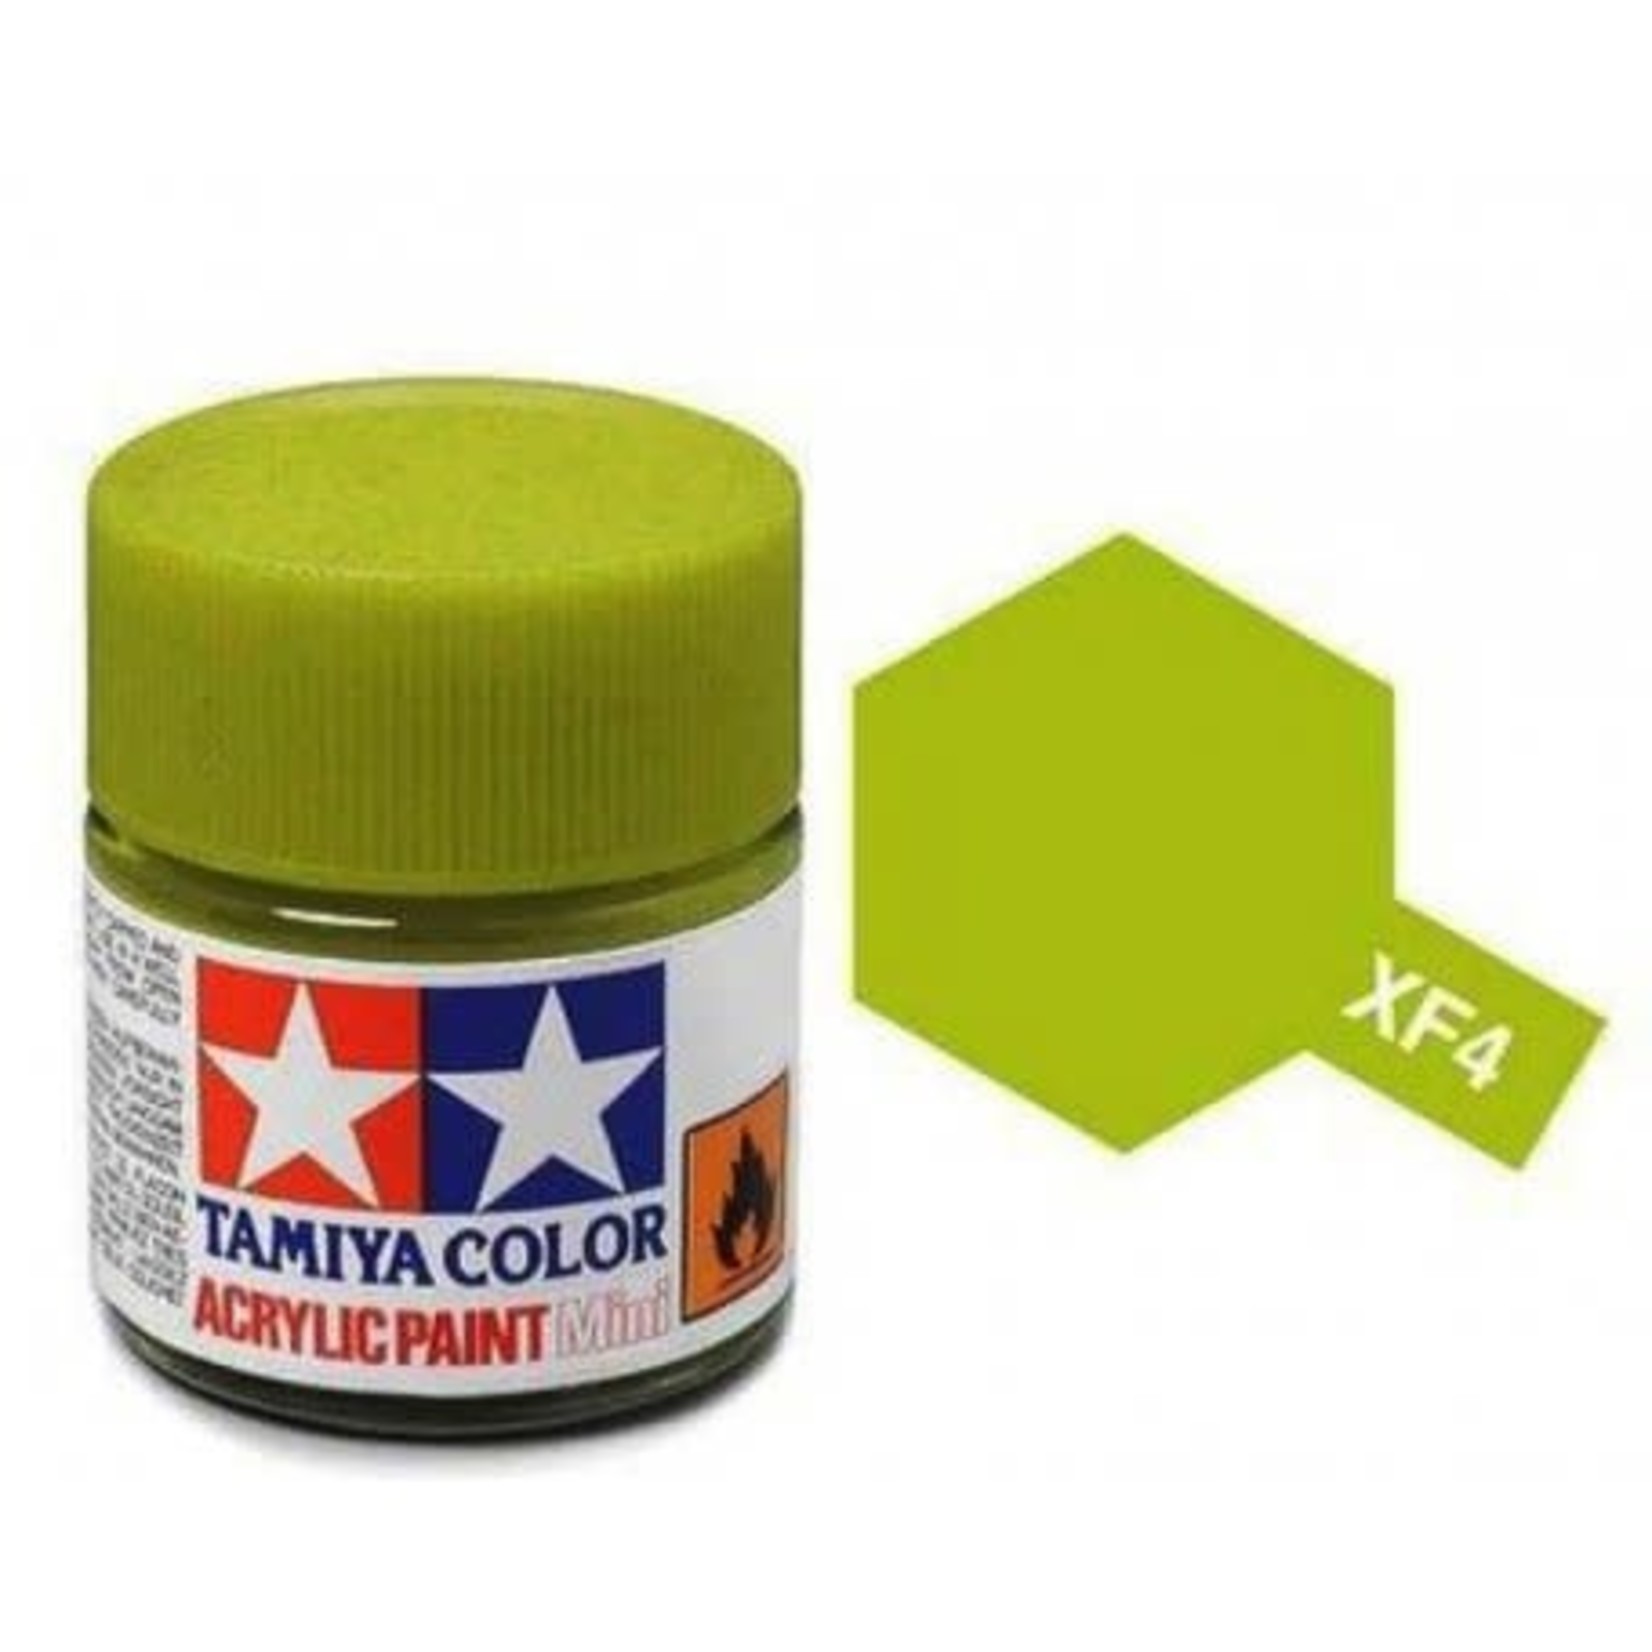 TAMIYA TAMIYA ACRYLIC XF-04 FLAT YELLOW GREEN